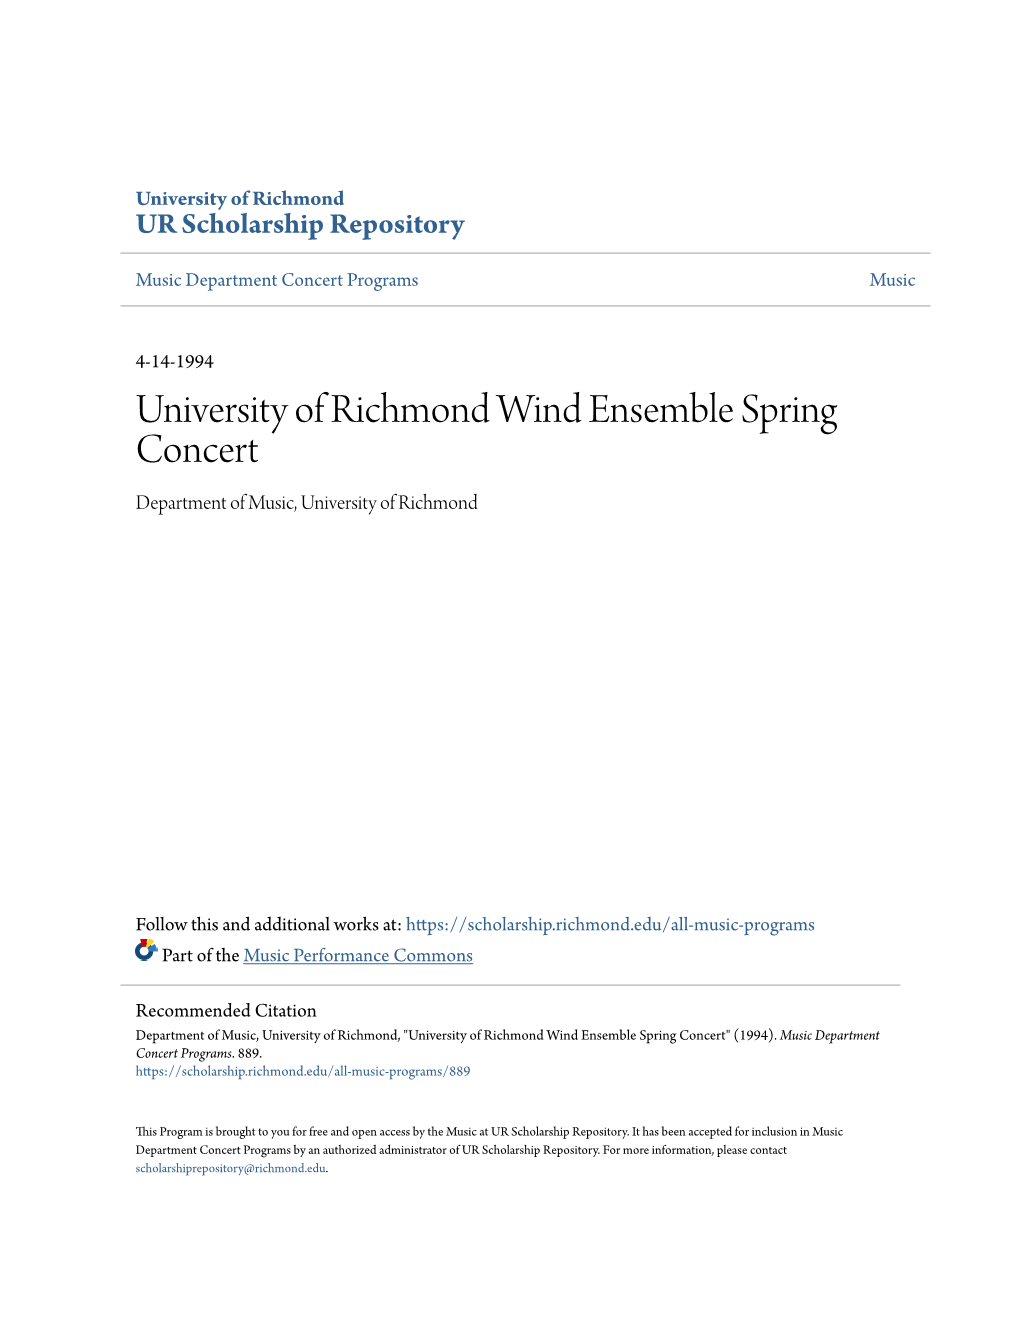 University of Richmond Wind Ensemble Spring Concert Department of Music, University of Richmond